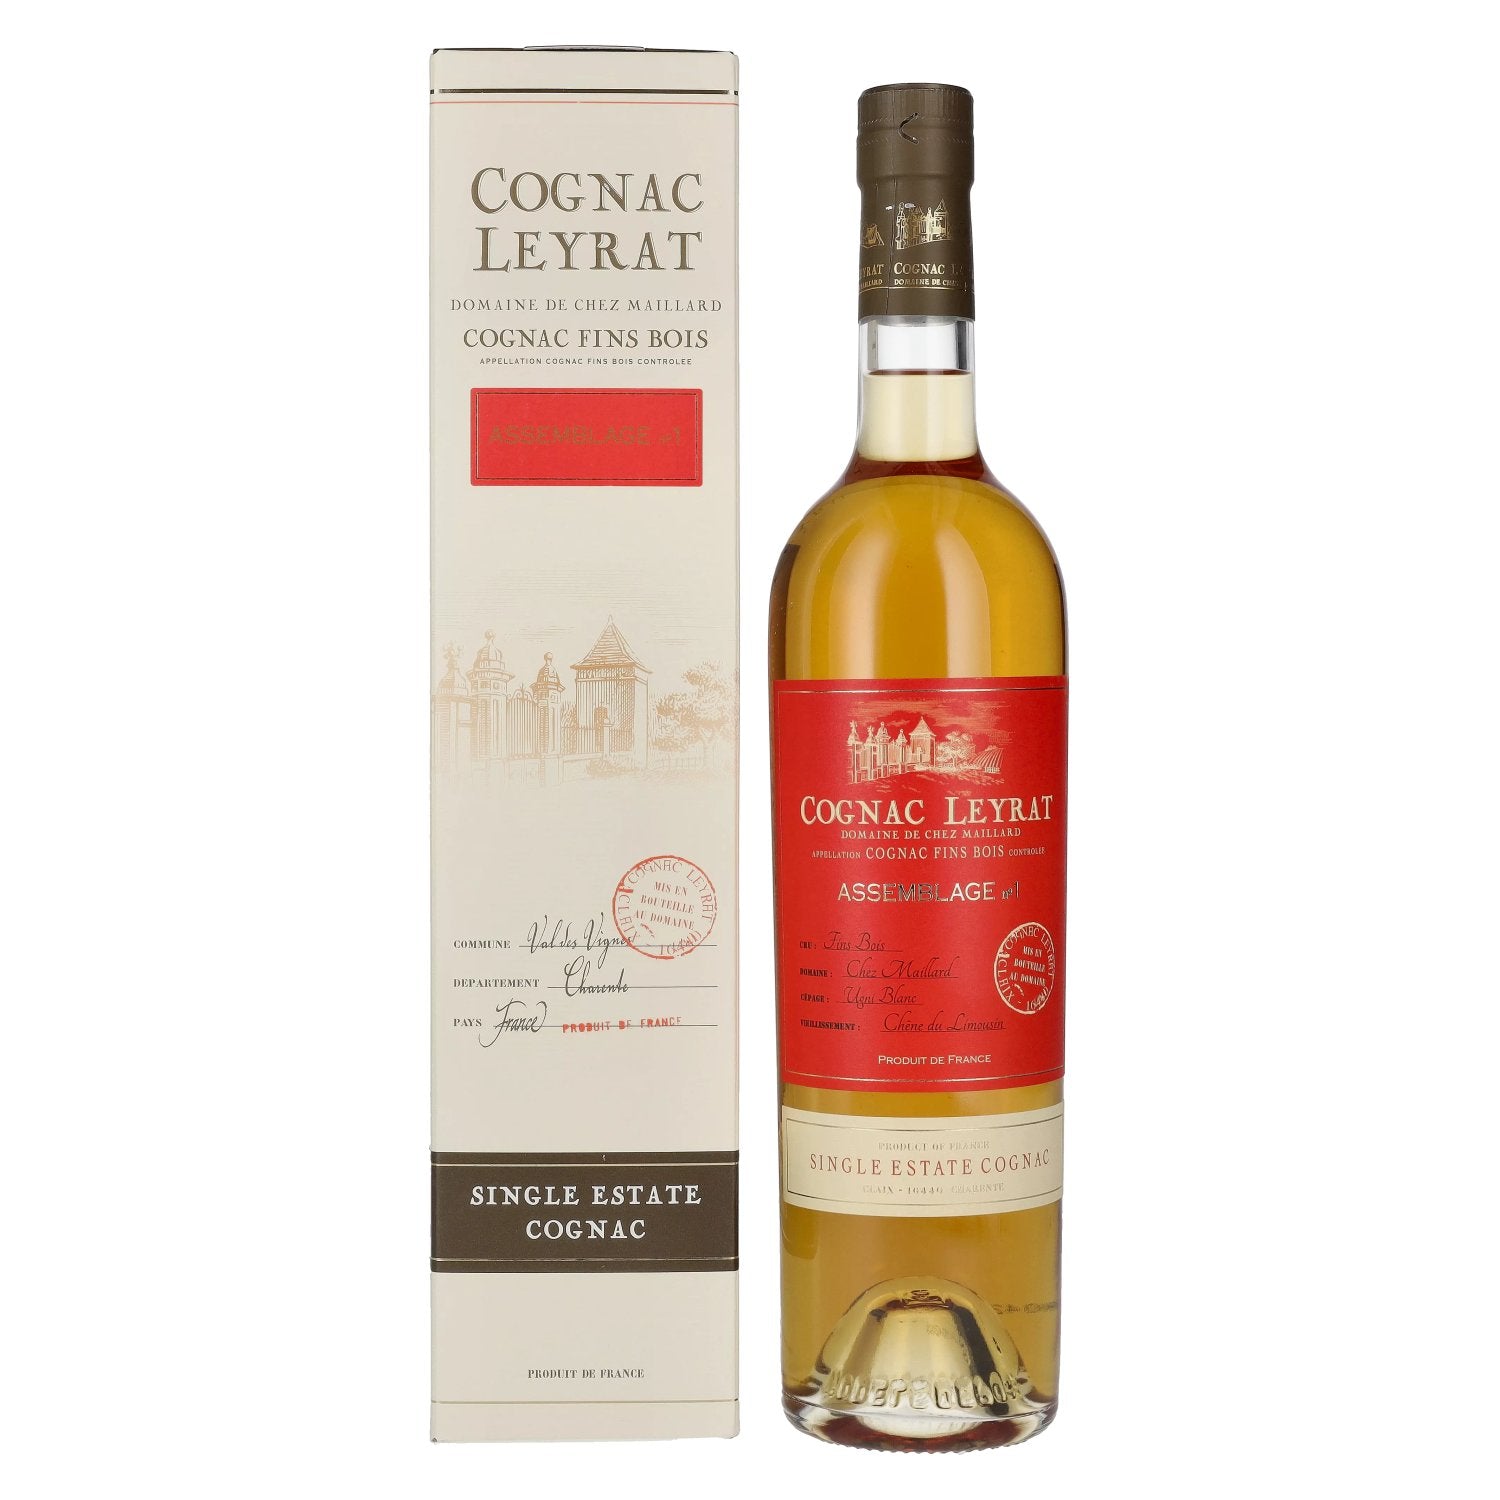 Cognac Leyrat ASSEMBLAGE N1 Single Estate Cognac 42% Vol. 0,7l in Giftbox